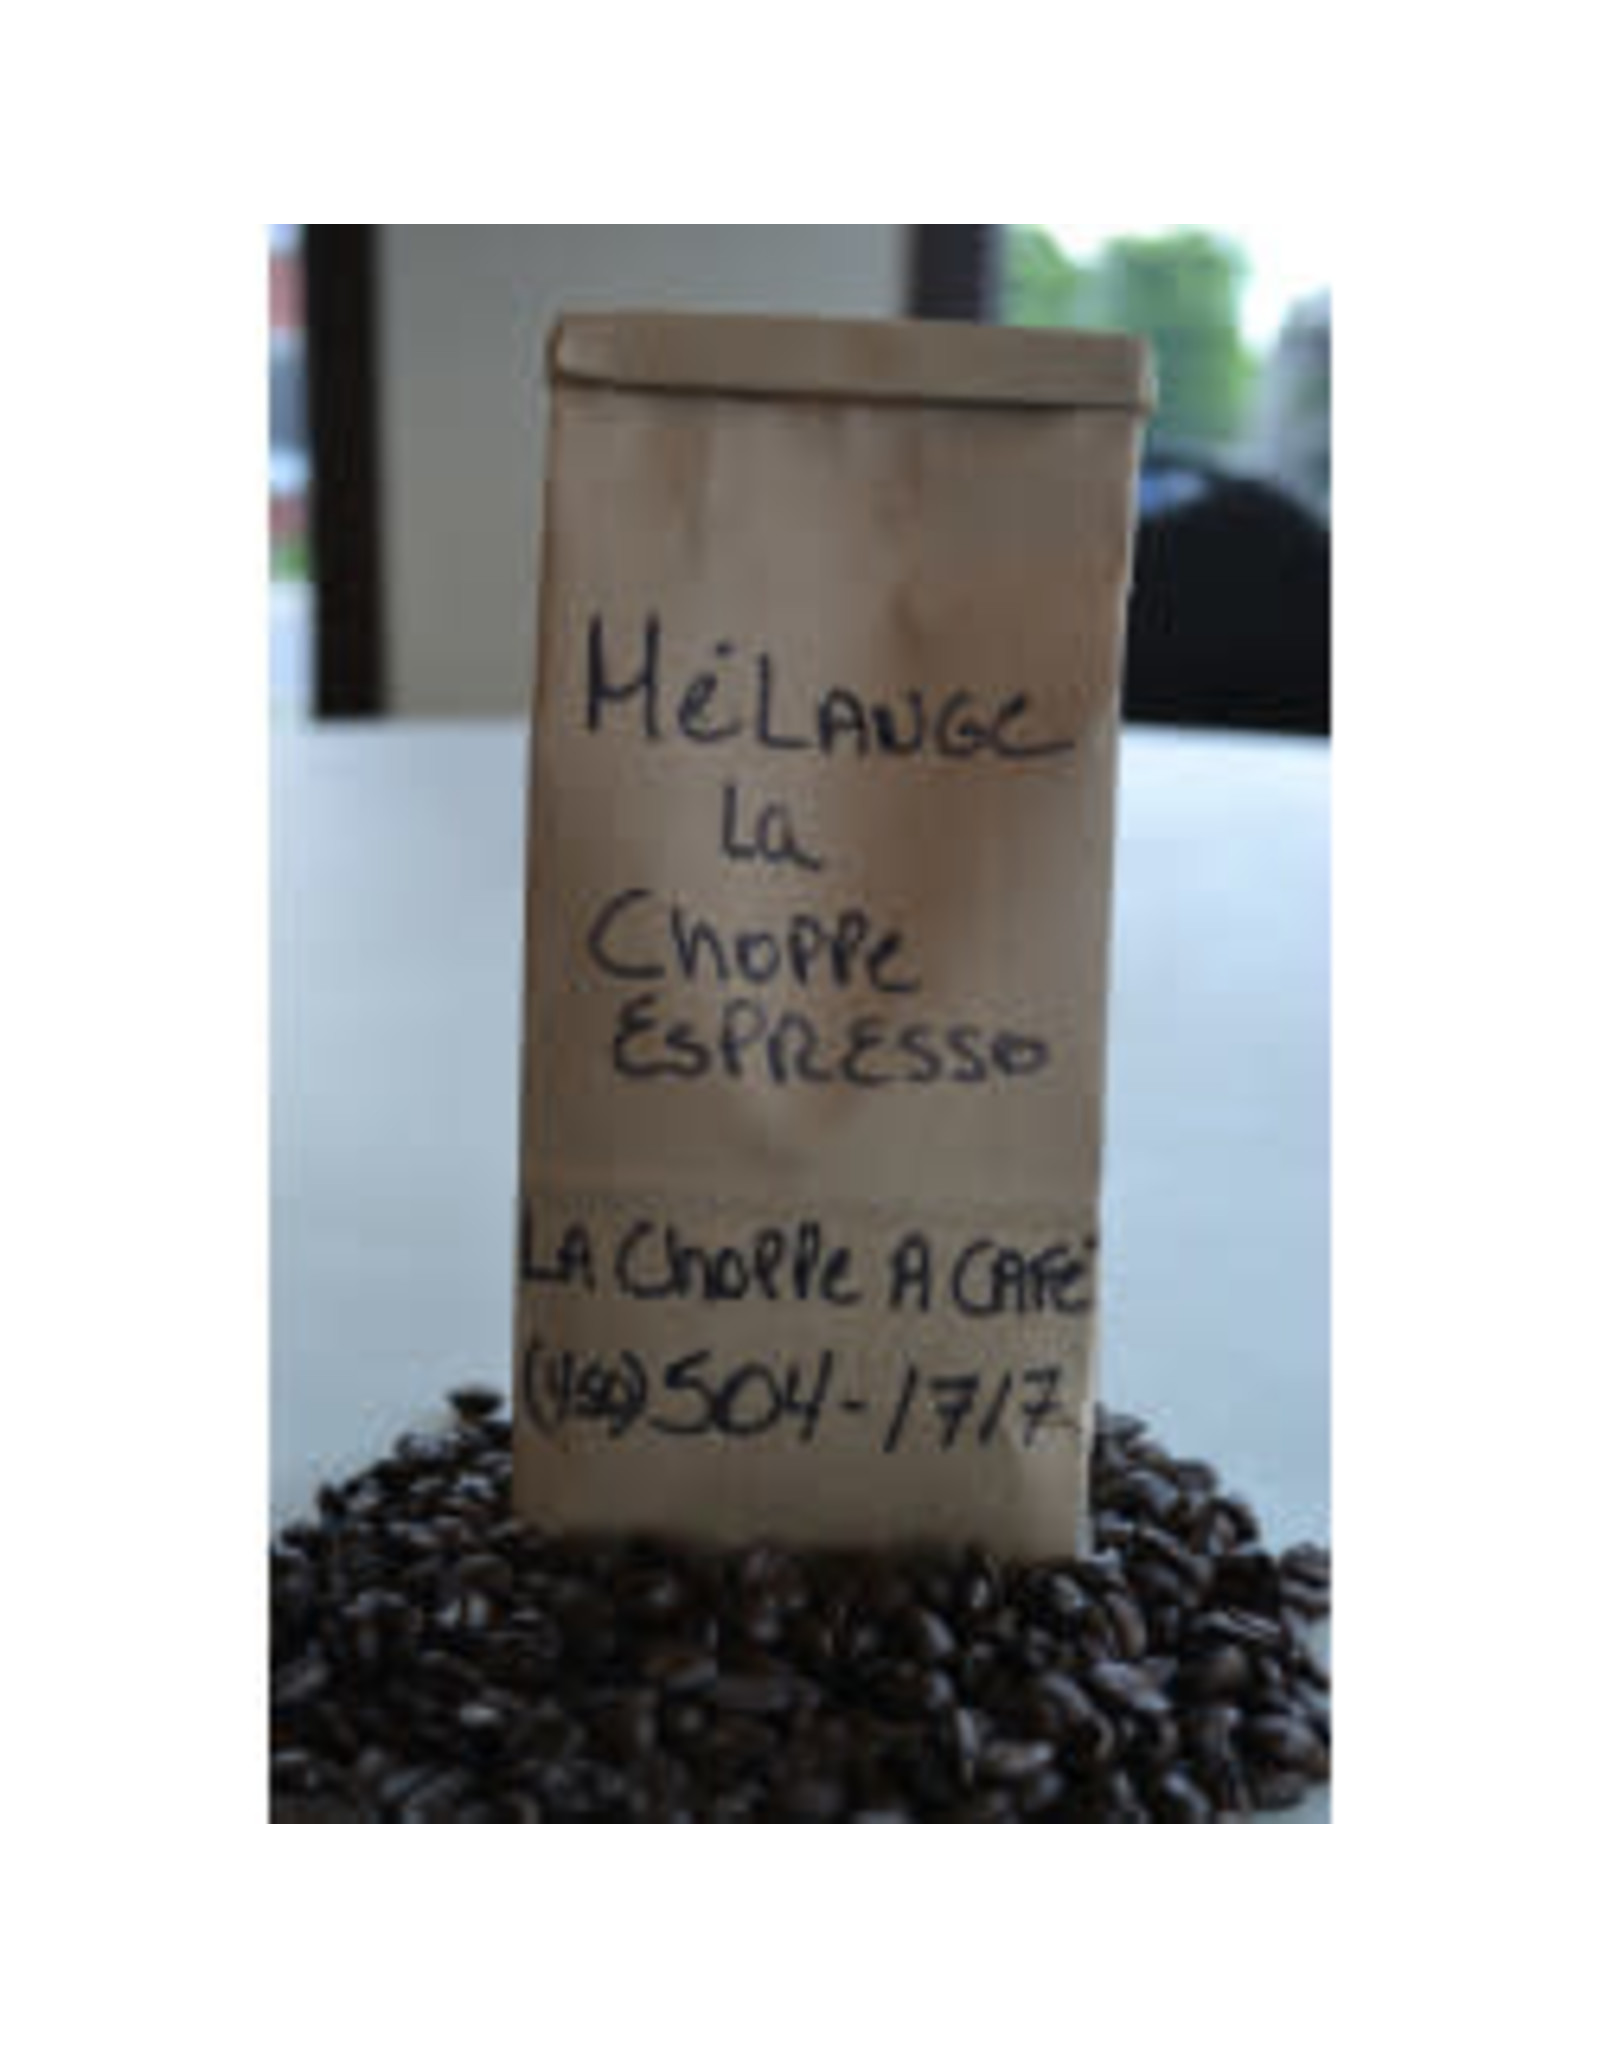 Mélange La Choppe espresso